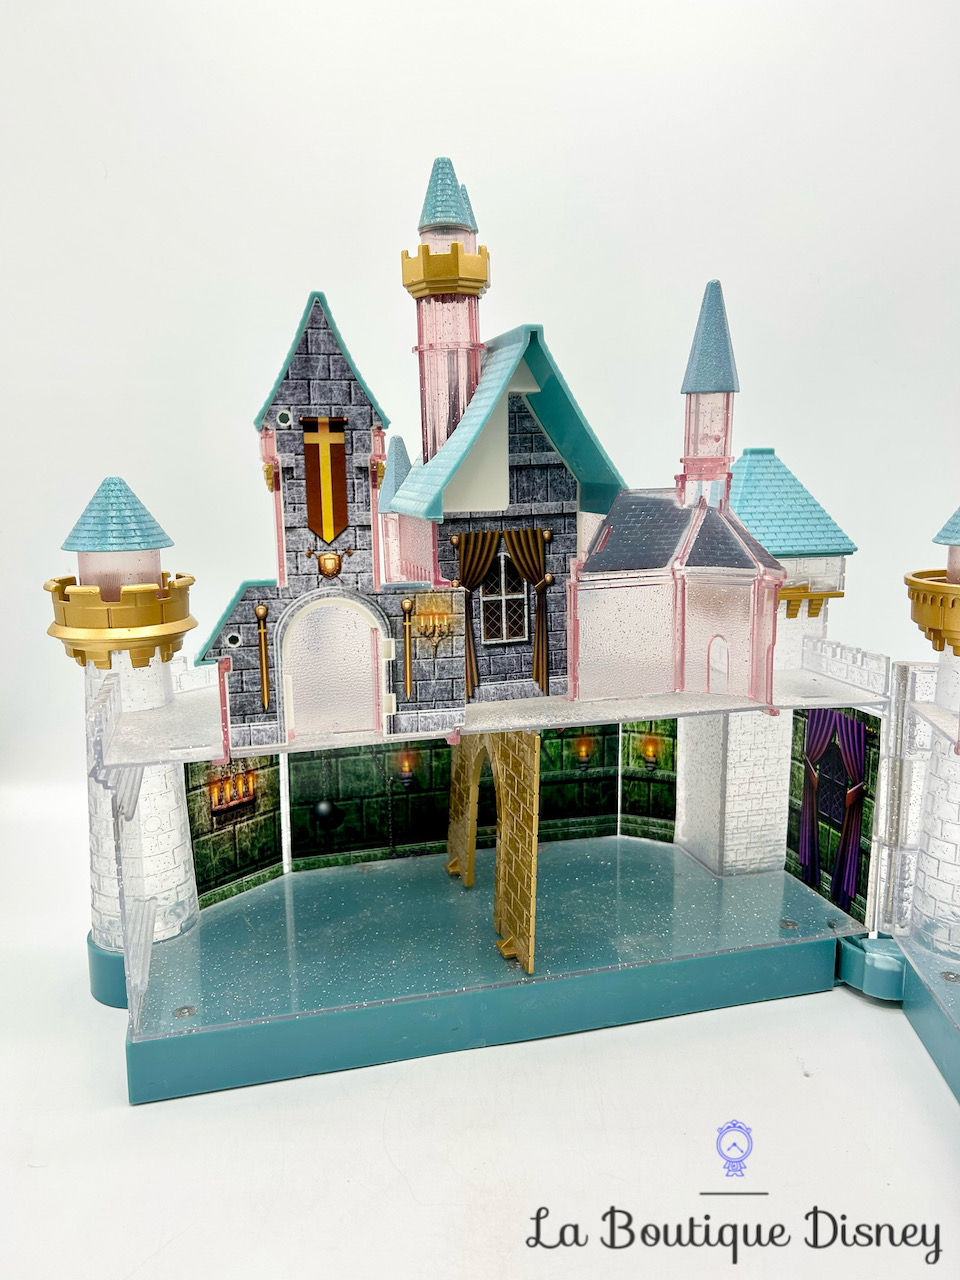 jouet-chateau-princesses-disneyland-paris-2021-disney-lumineux-sonore-figurines-8